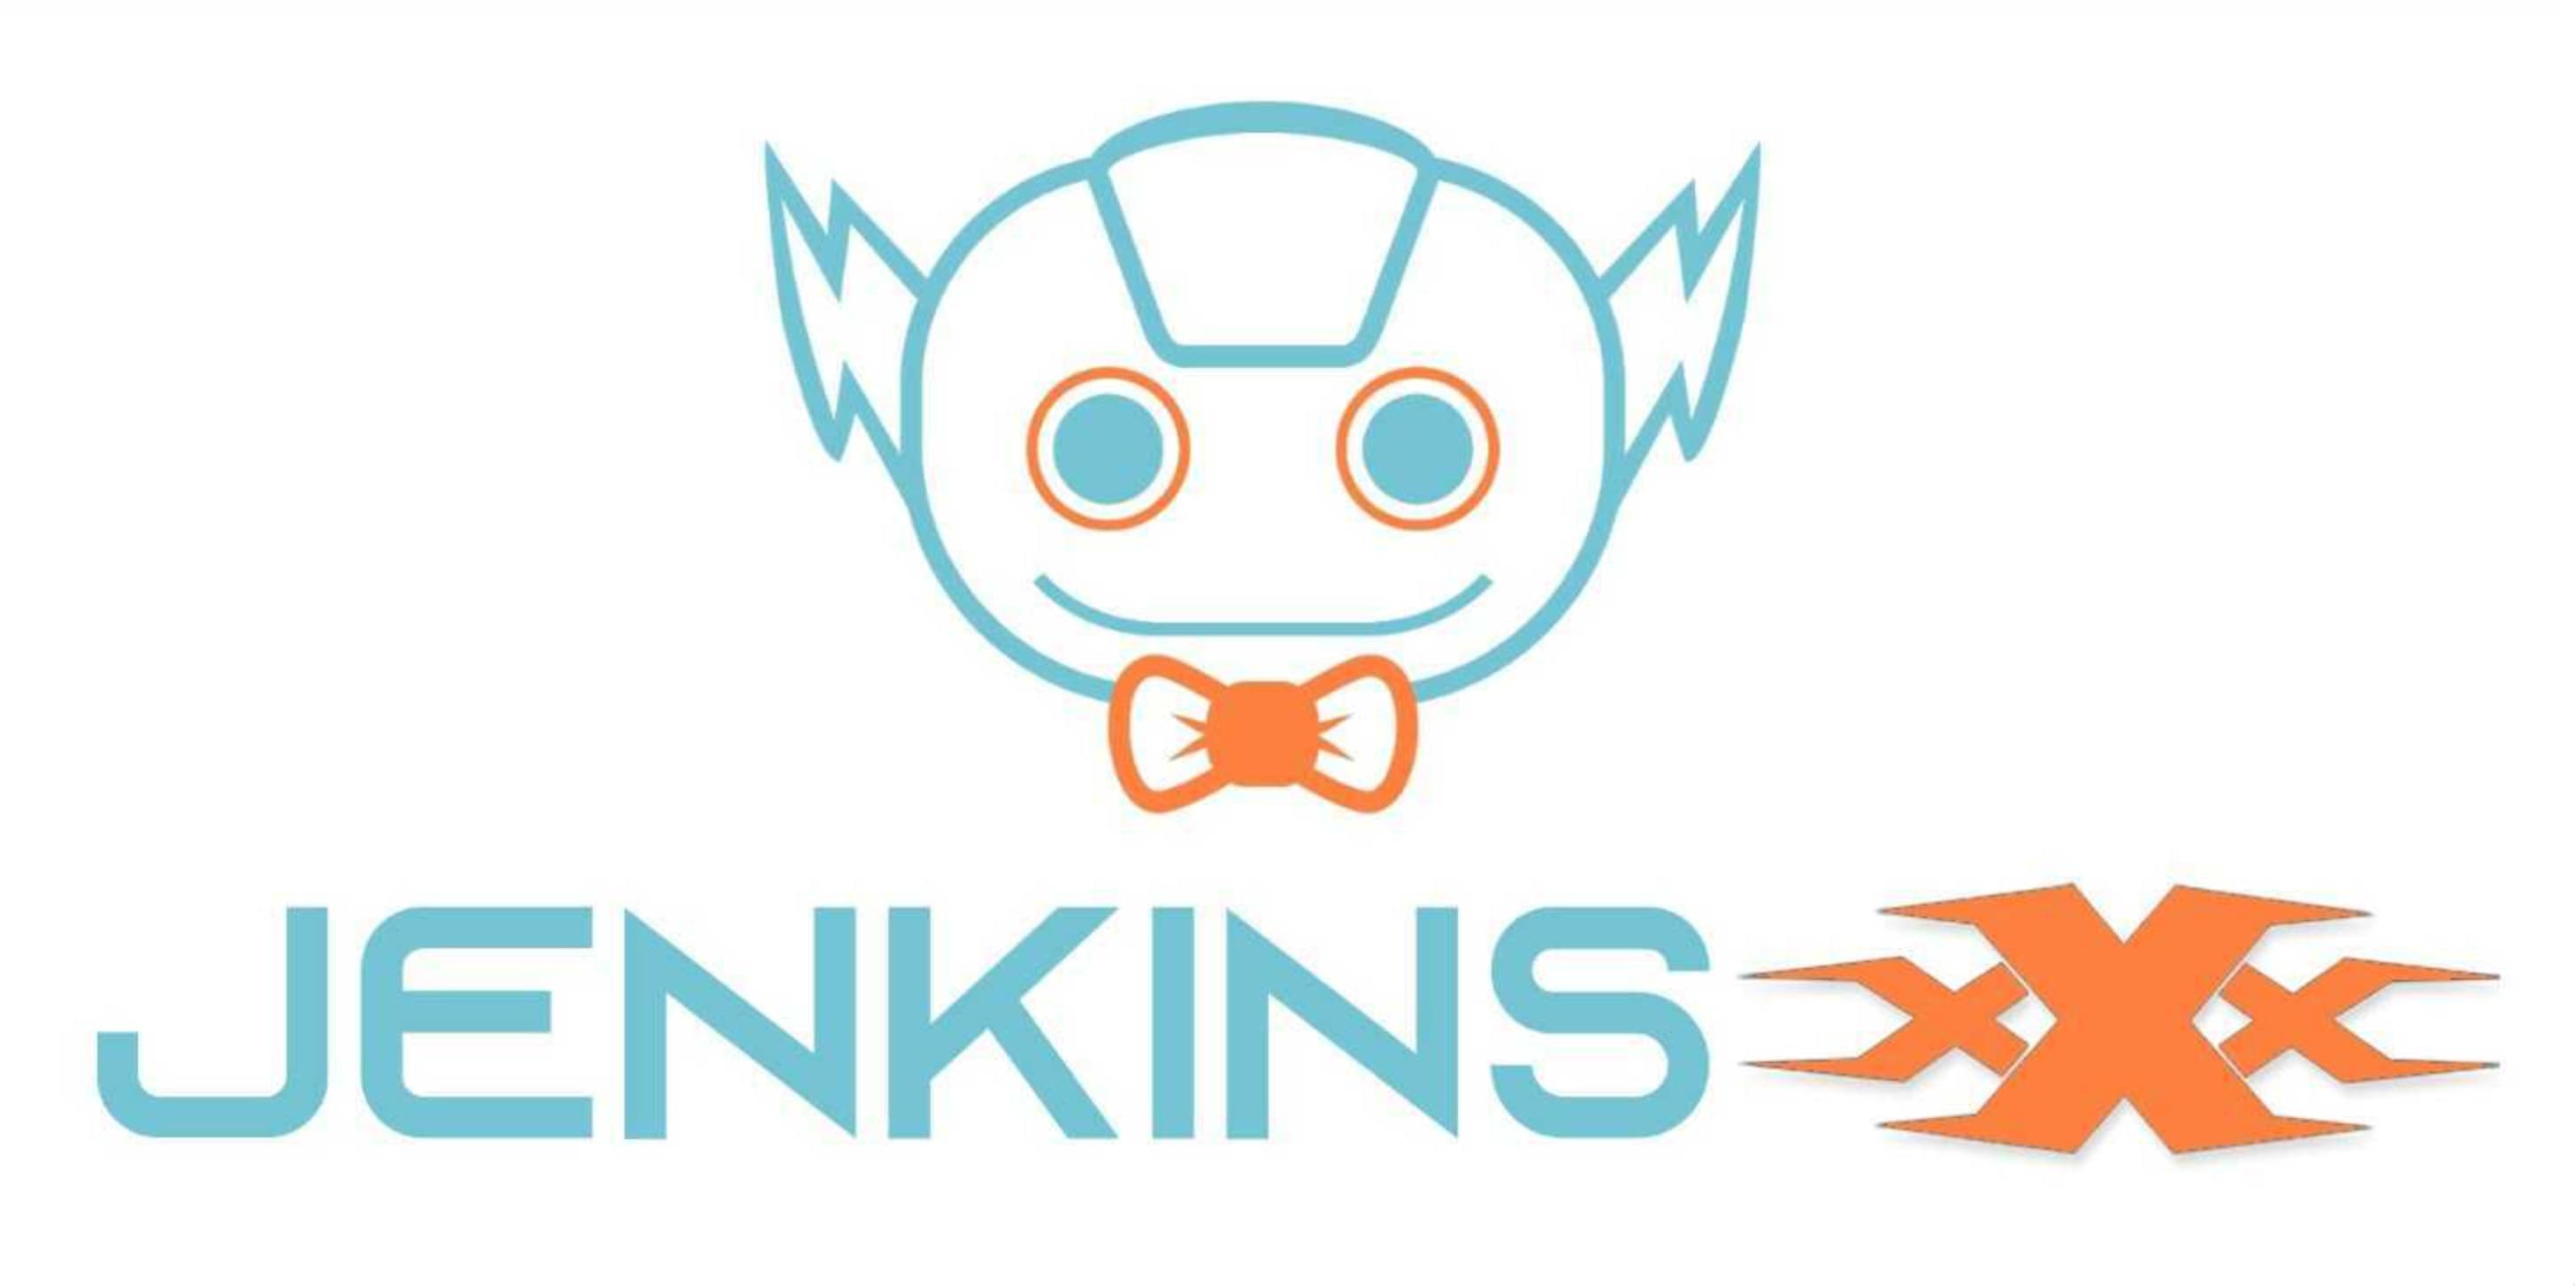 jenkins-x-logo